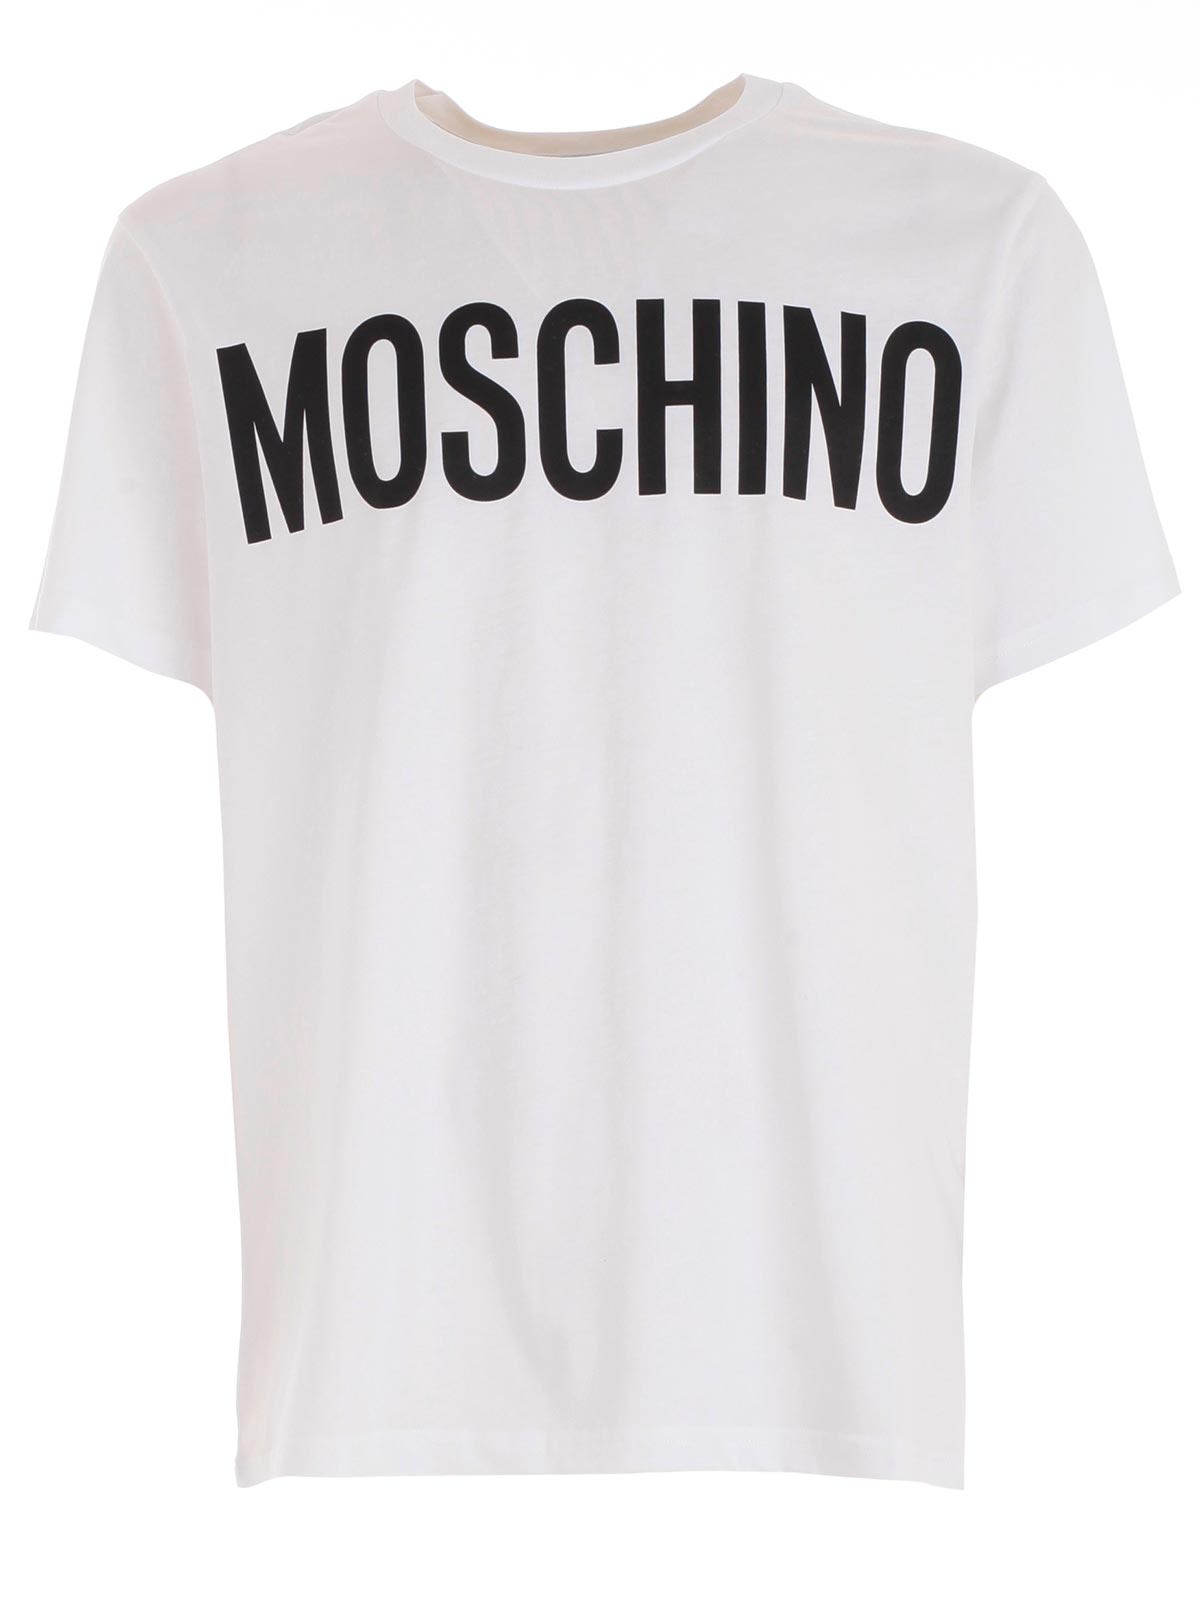 Moschino Logo Printed Cotton Jersey T-Shirt In White | ModeSens